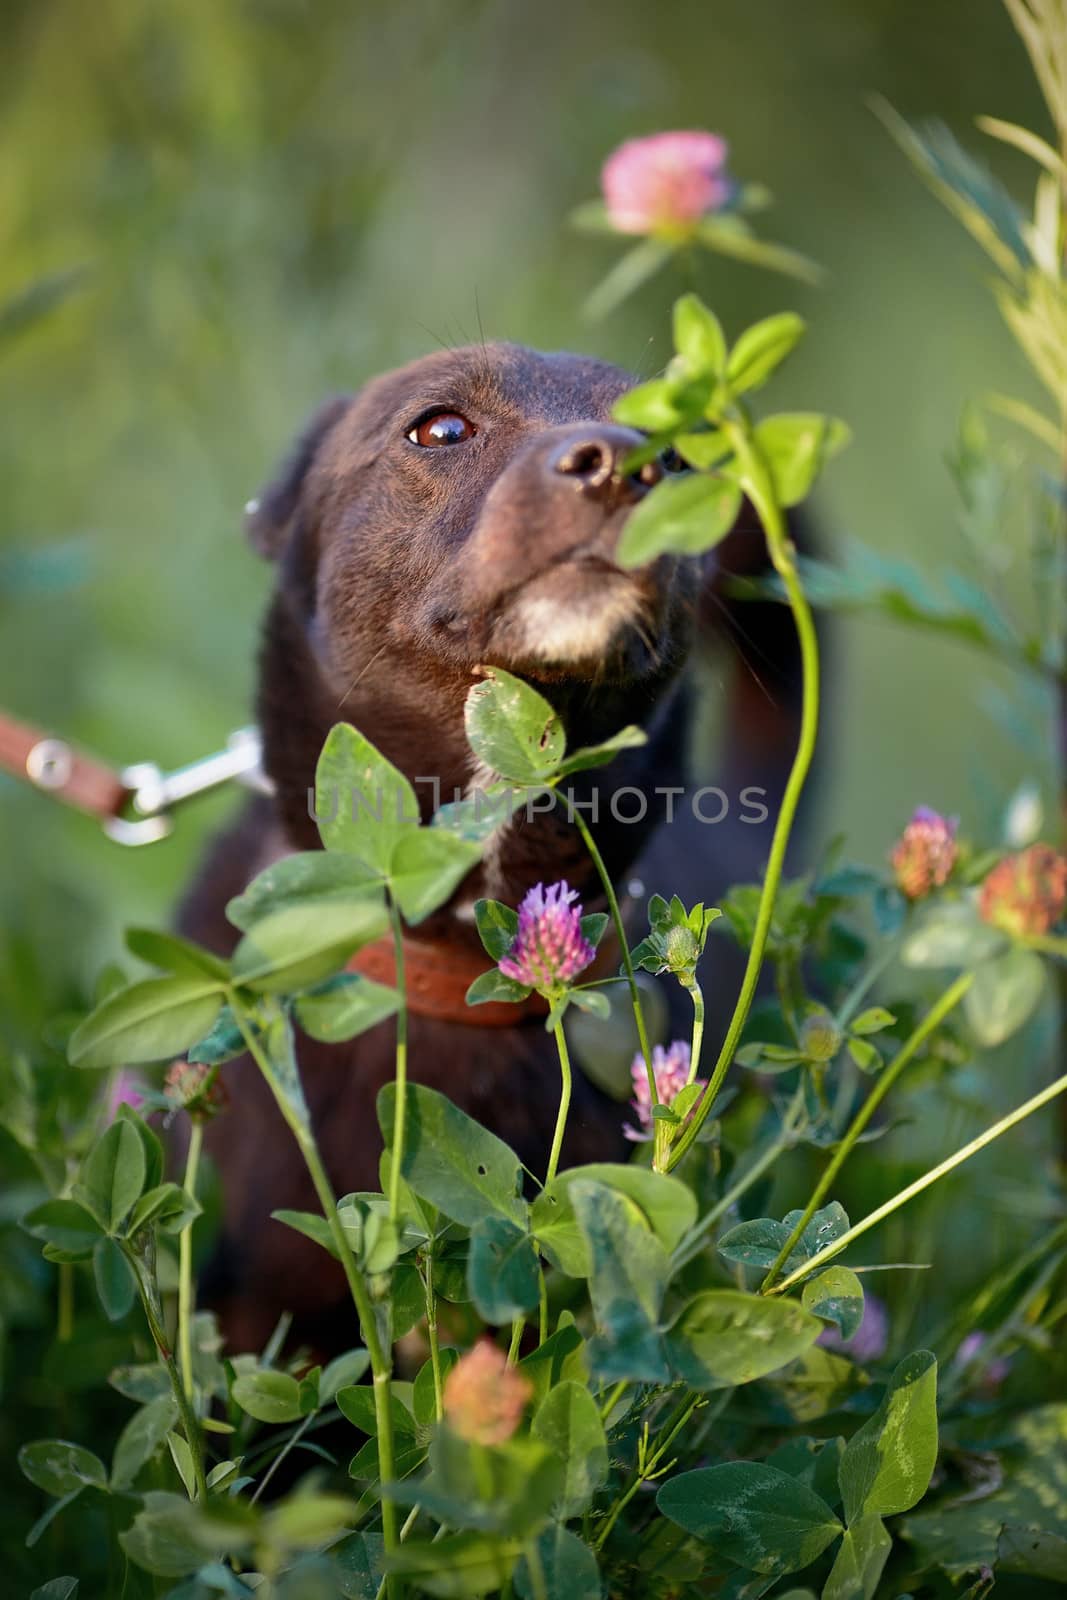 The black doggie smells a clover flower. by Azaliya